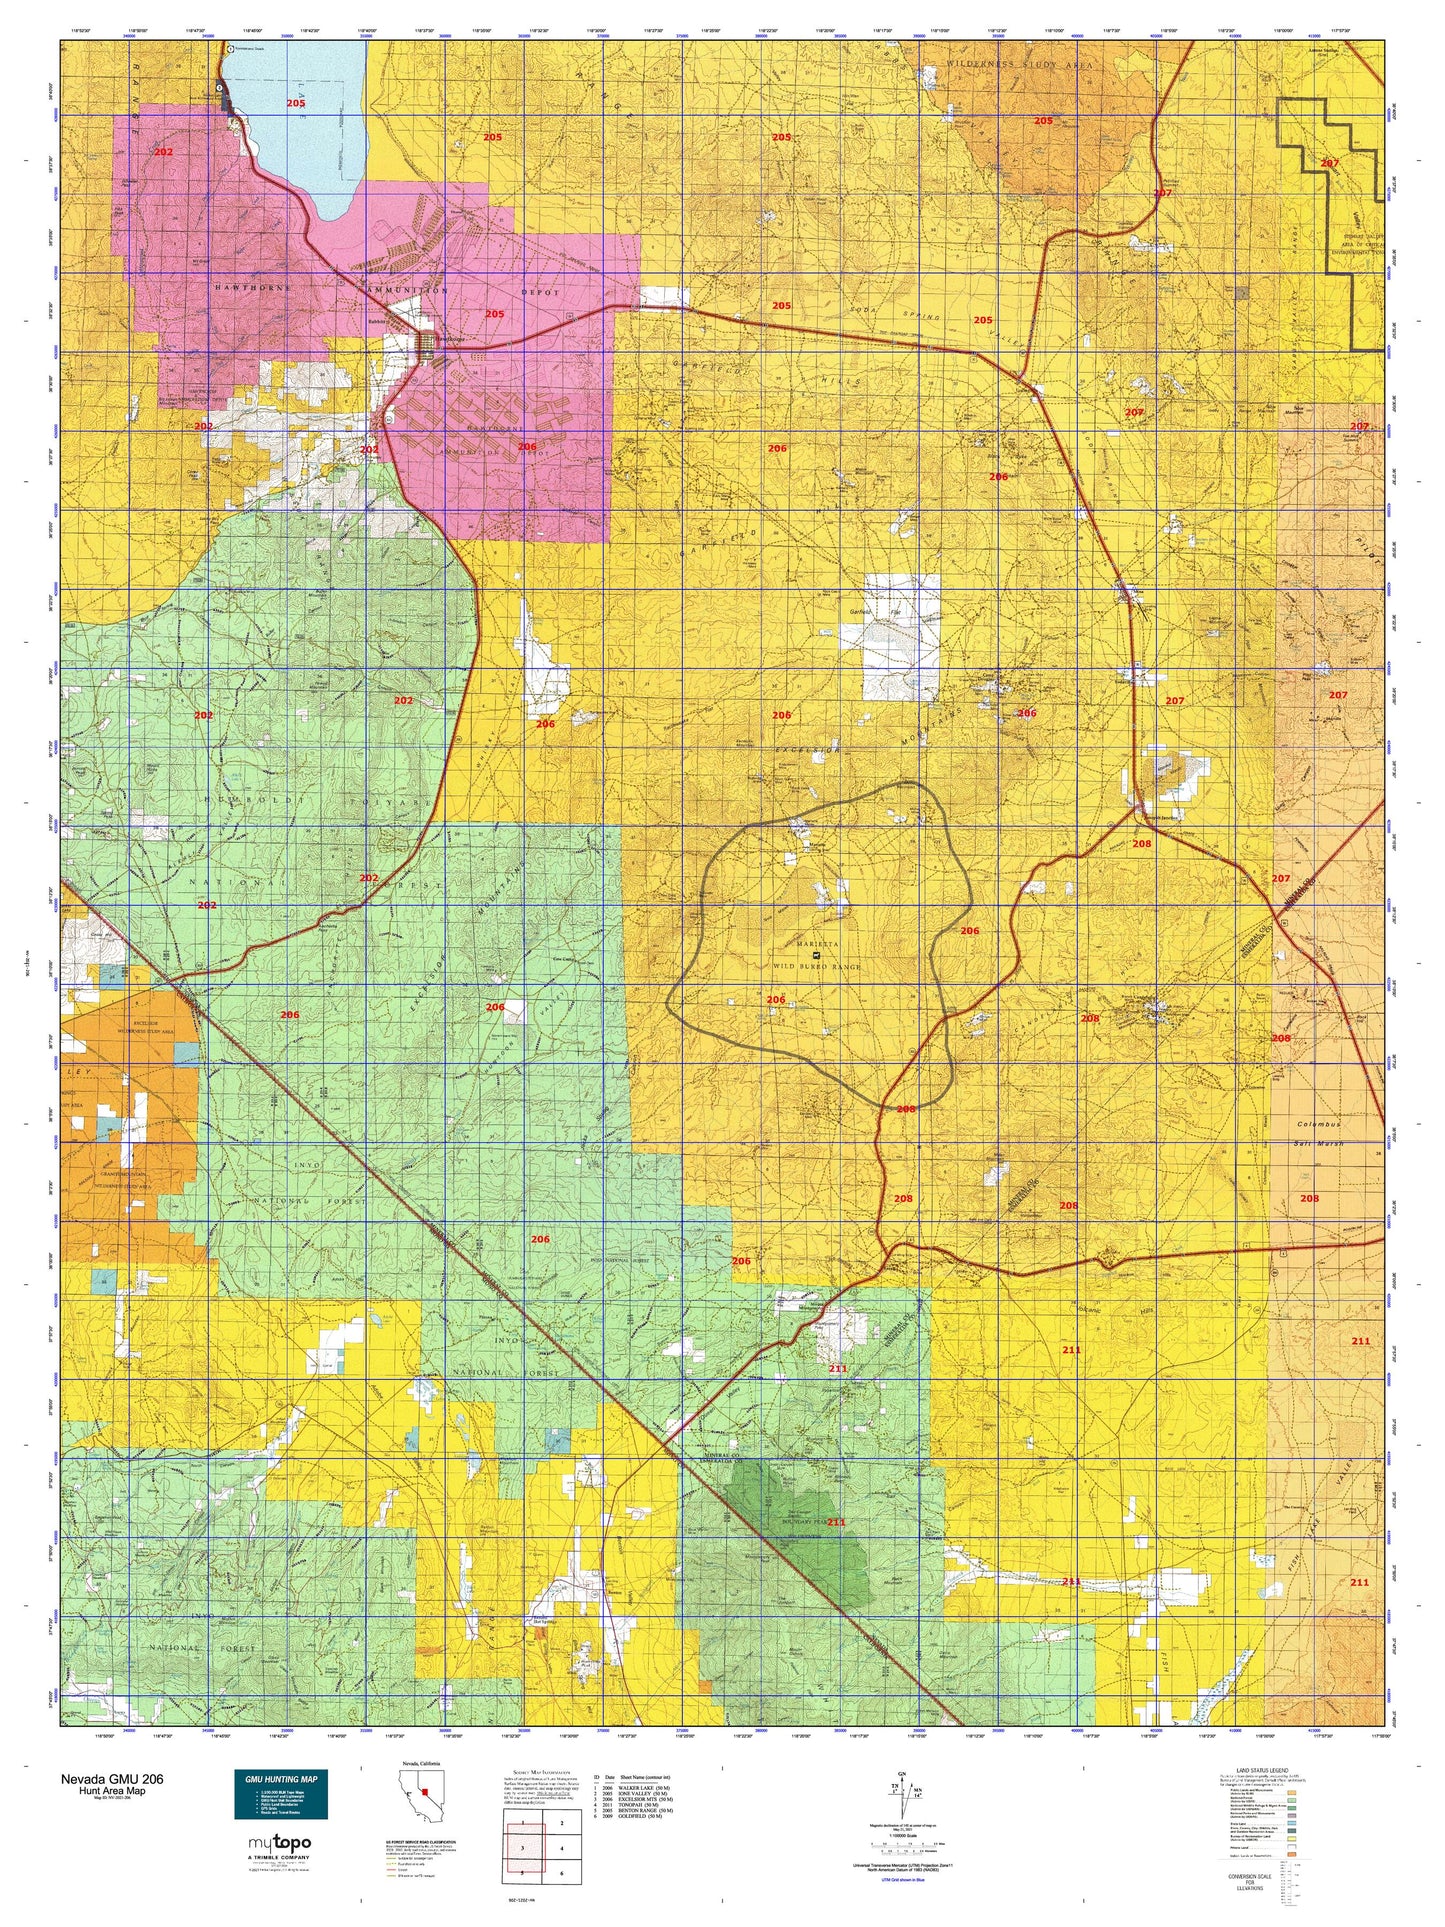 Nevada GMU 206 Map Image